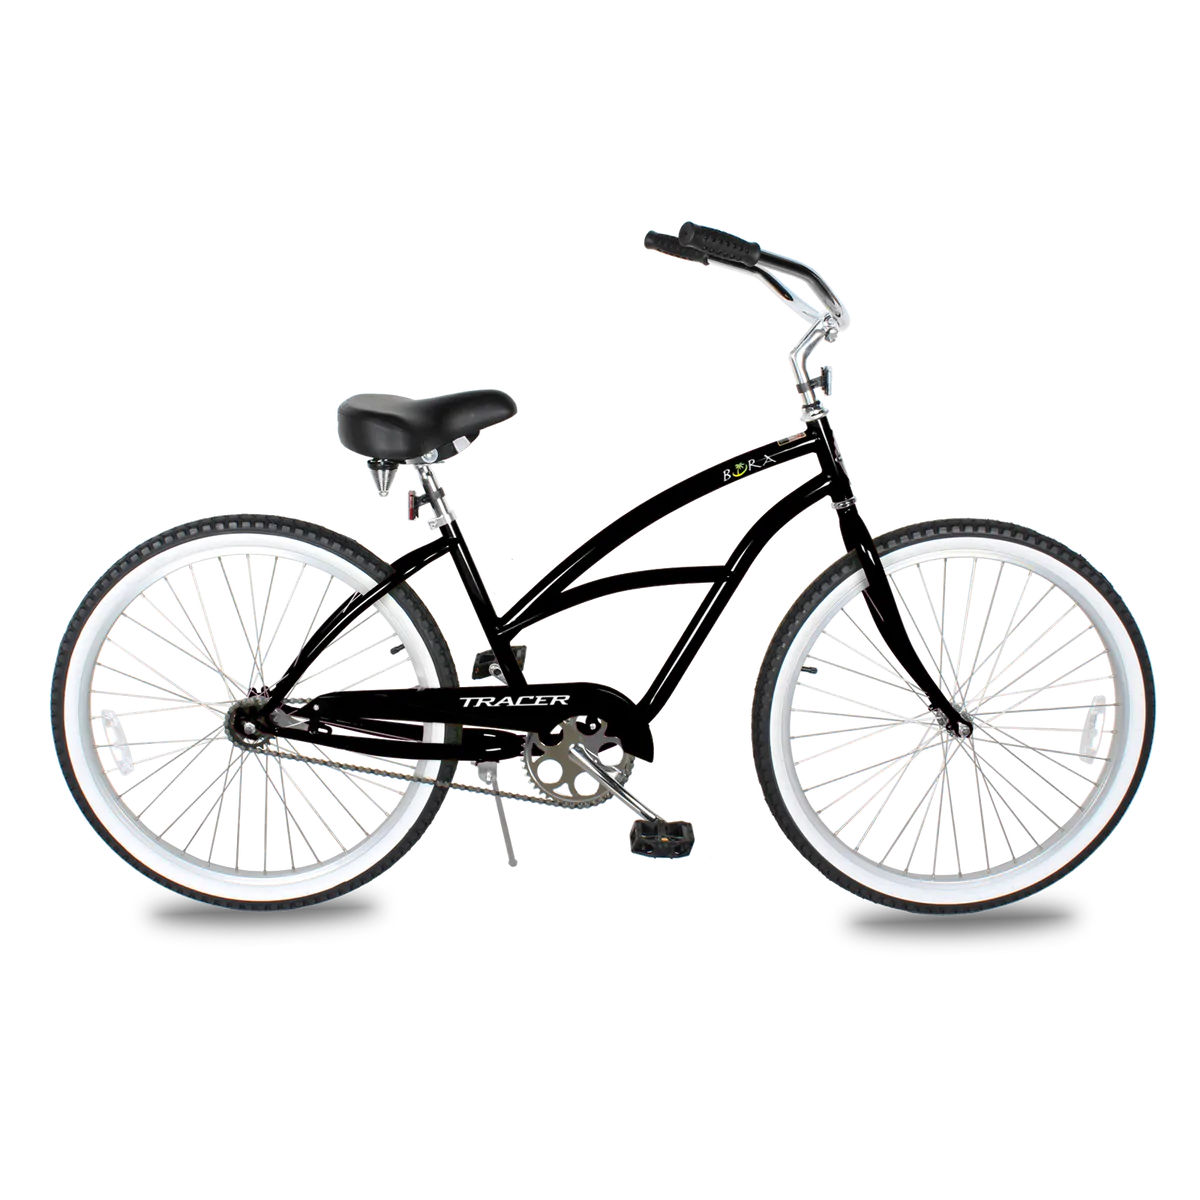 Tracer Bora 26" Beach Cruiser Bike For Women - Black | Beach Cruiser Bikes | Cruiser Bikes | Beach Bikes | Single Speed | Single Speed Cycle | Adult Bike | Bike Lover USA